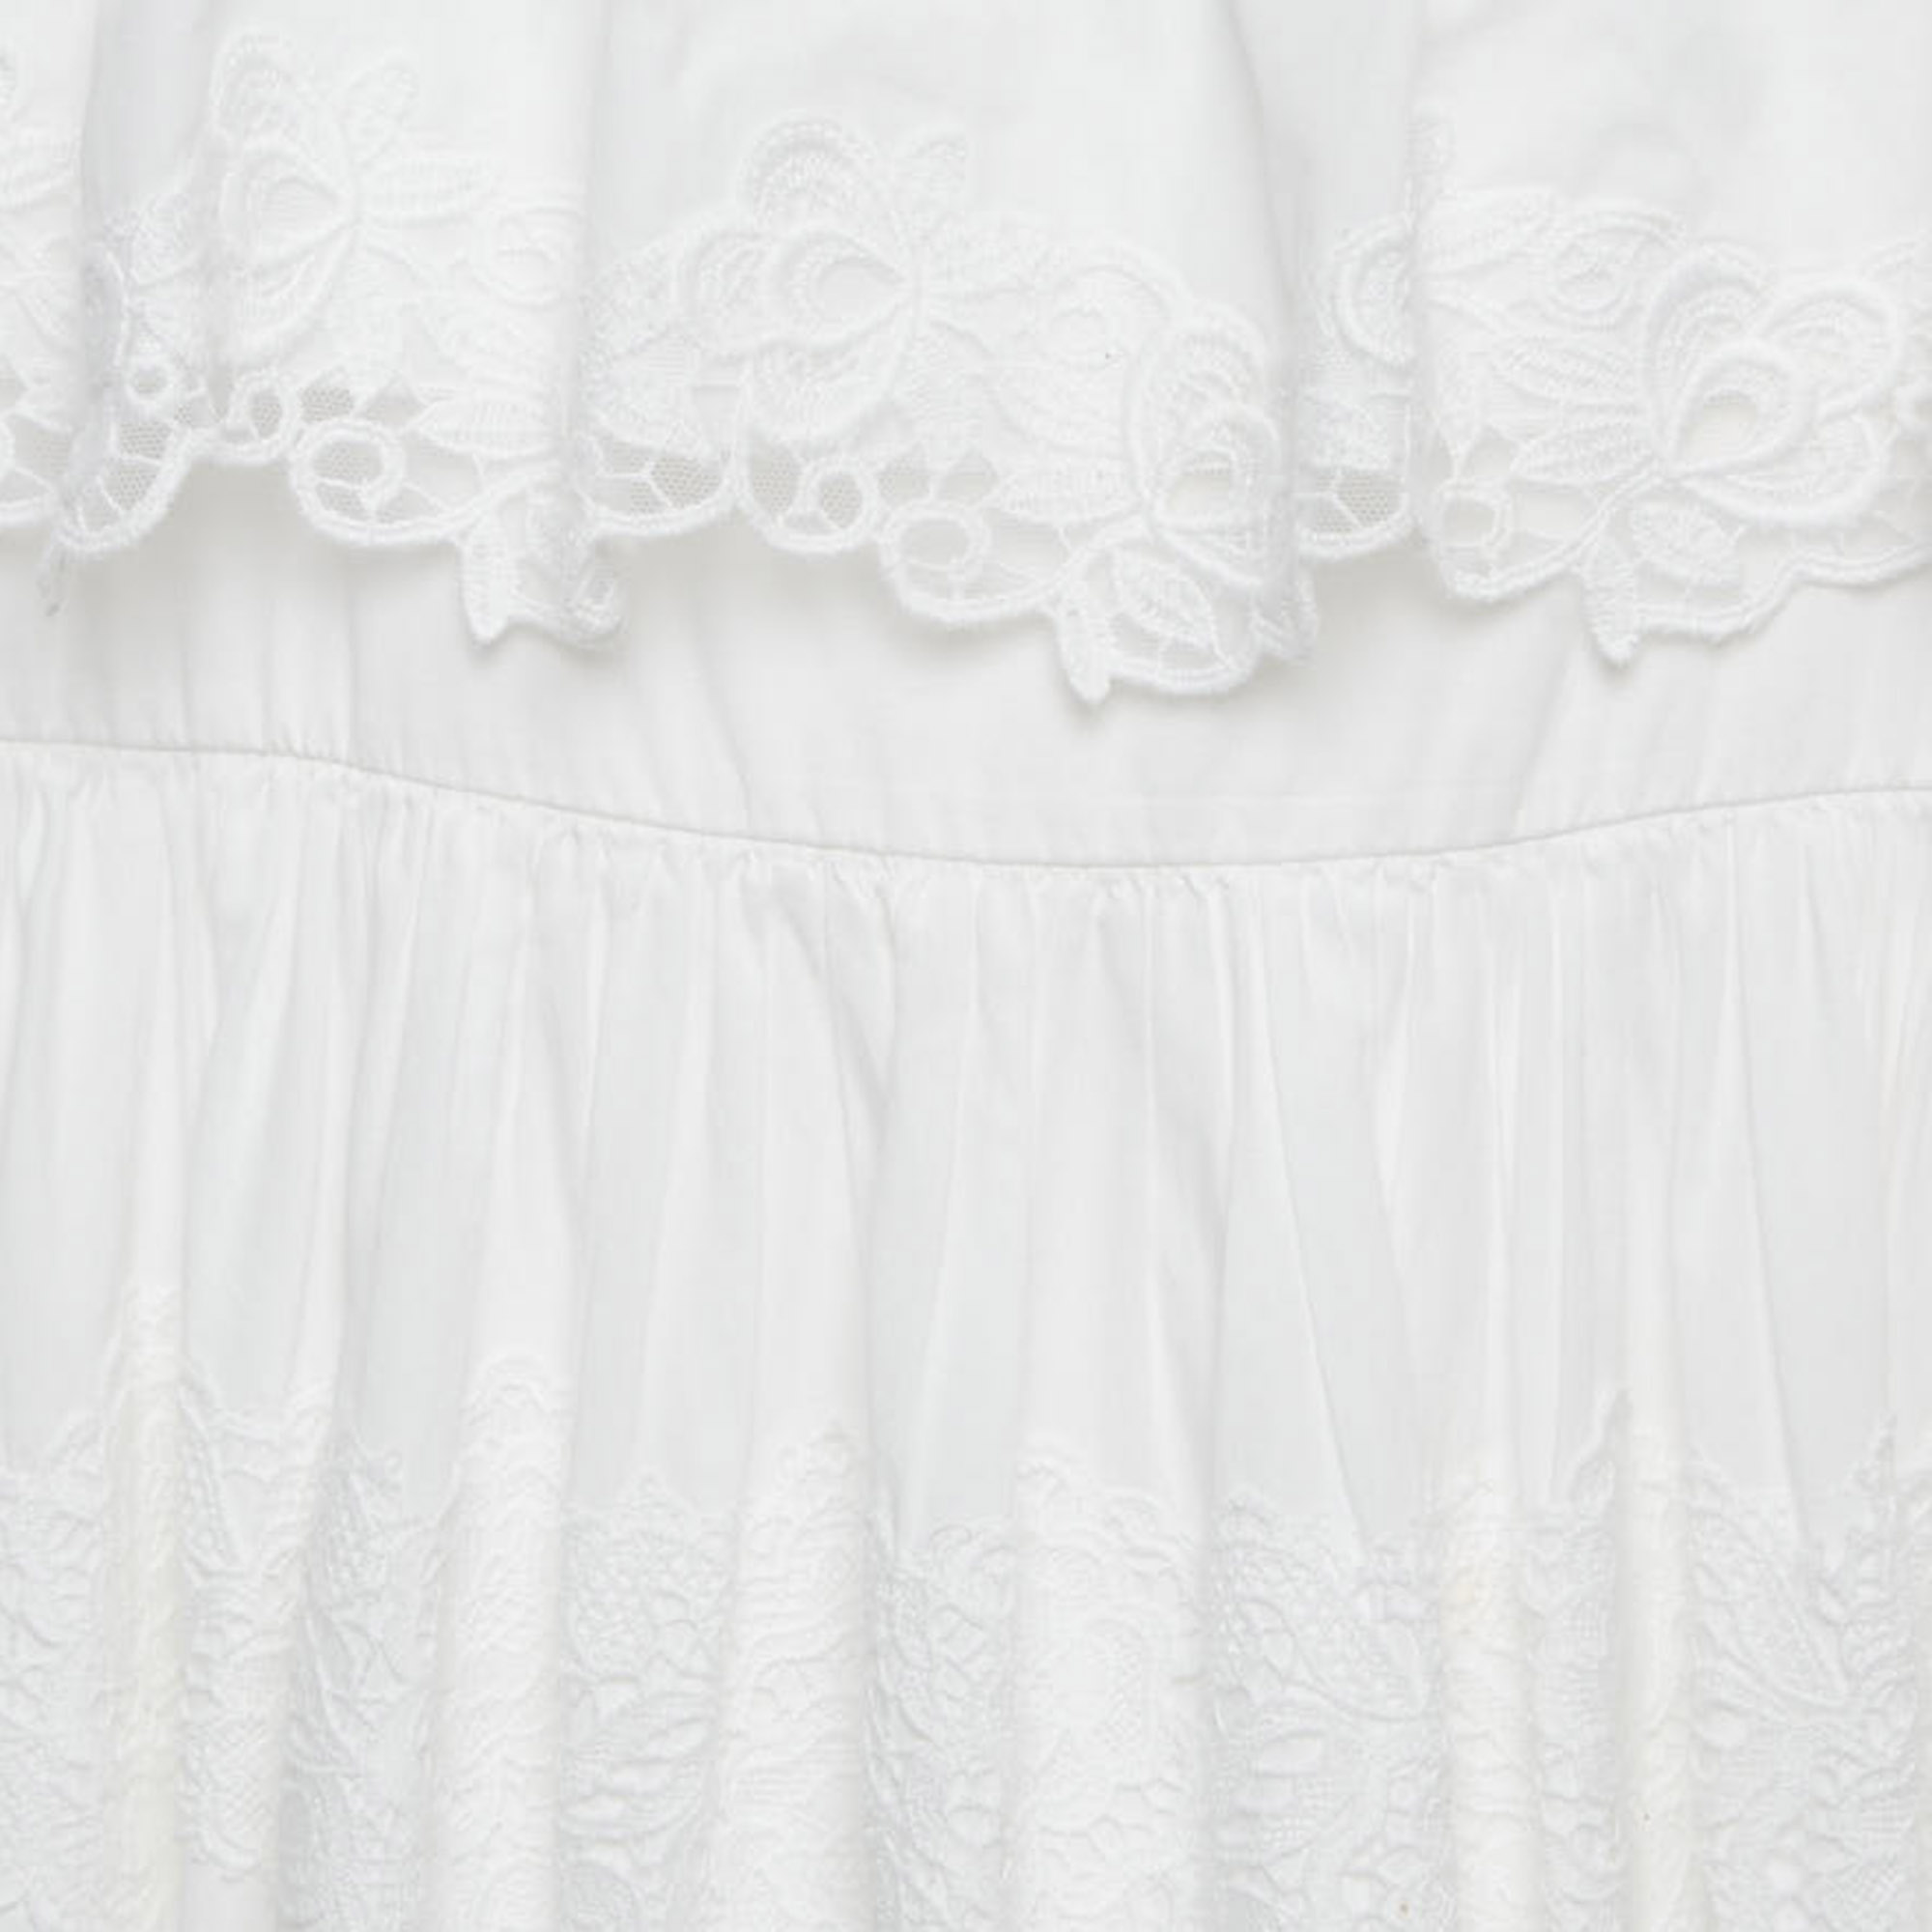 Dolce & Gabbana White Cotton Lace Trimmed Dress (11-12 Yrs)